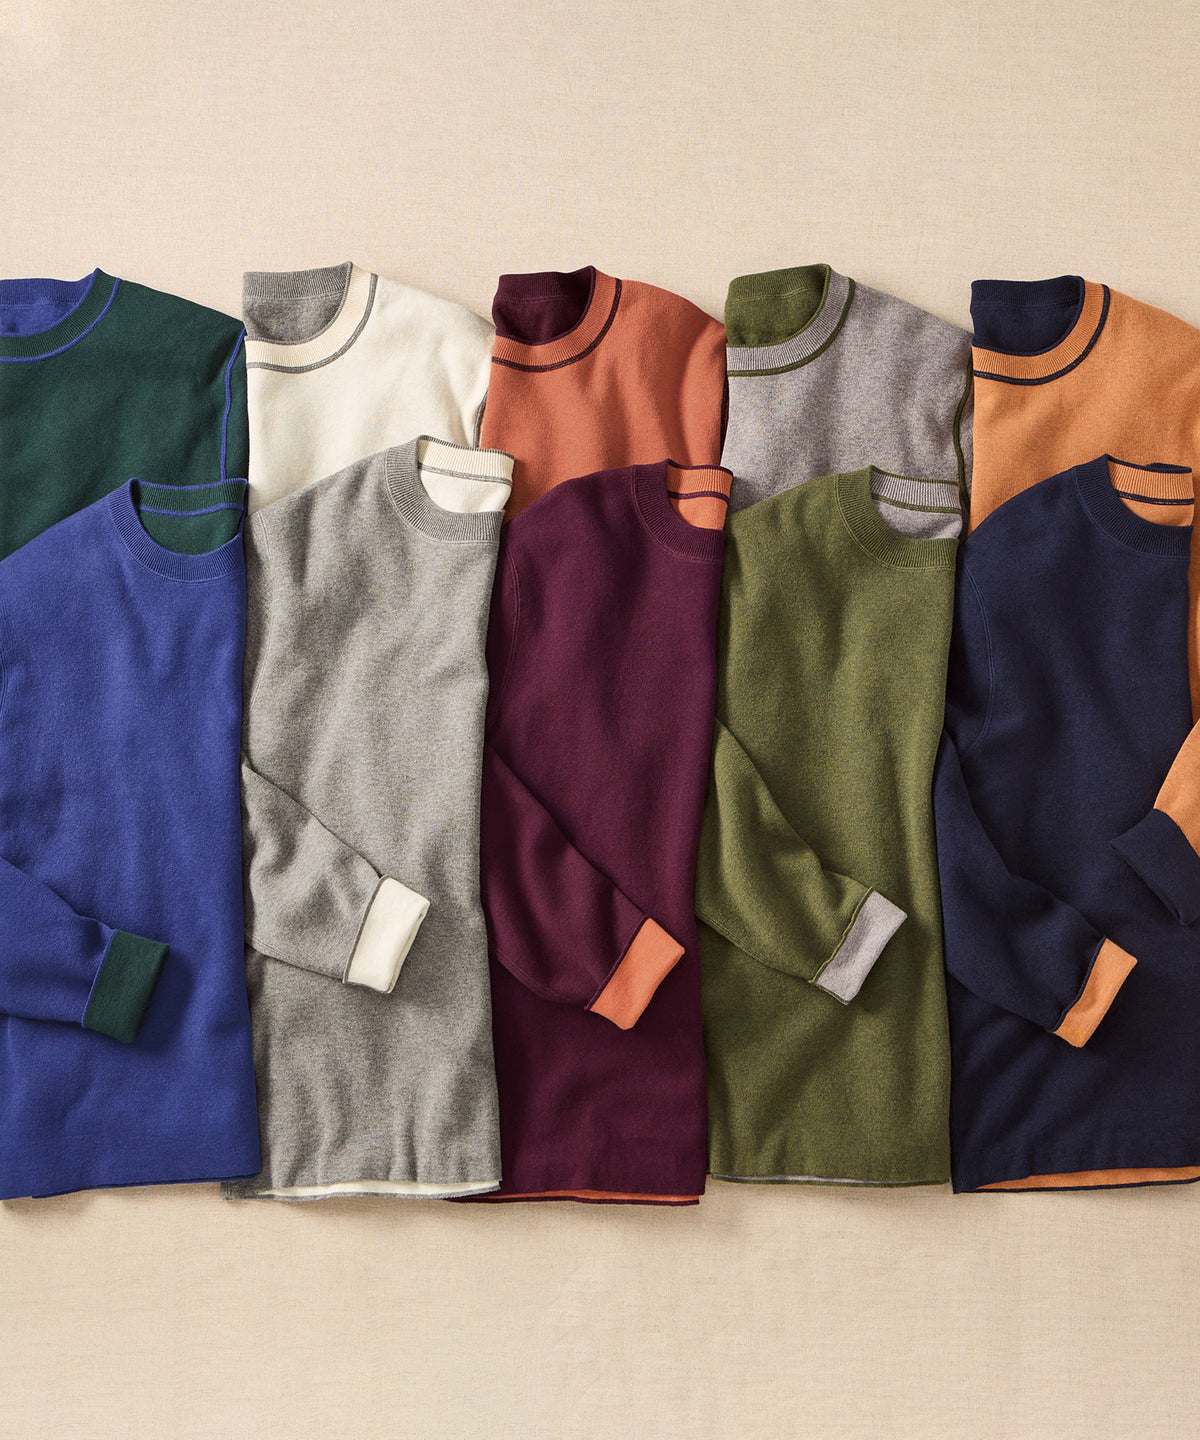 Reversible Cotton-Cashmere Sweater